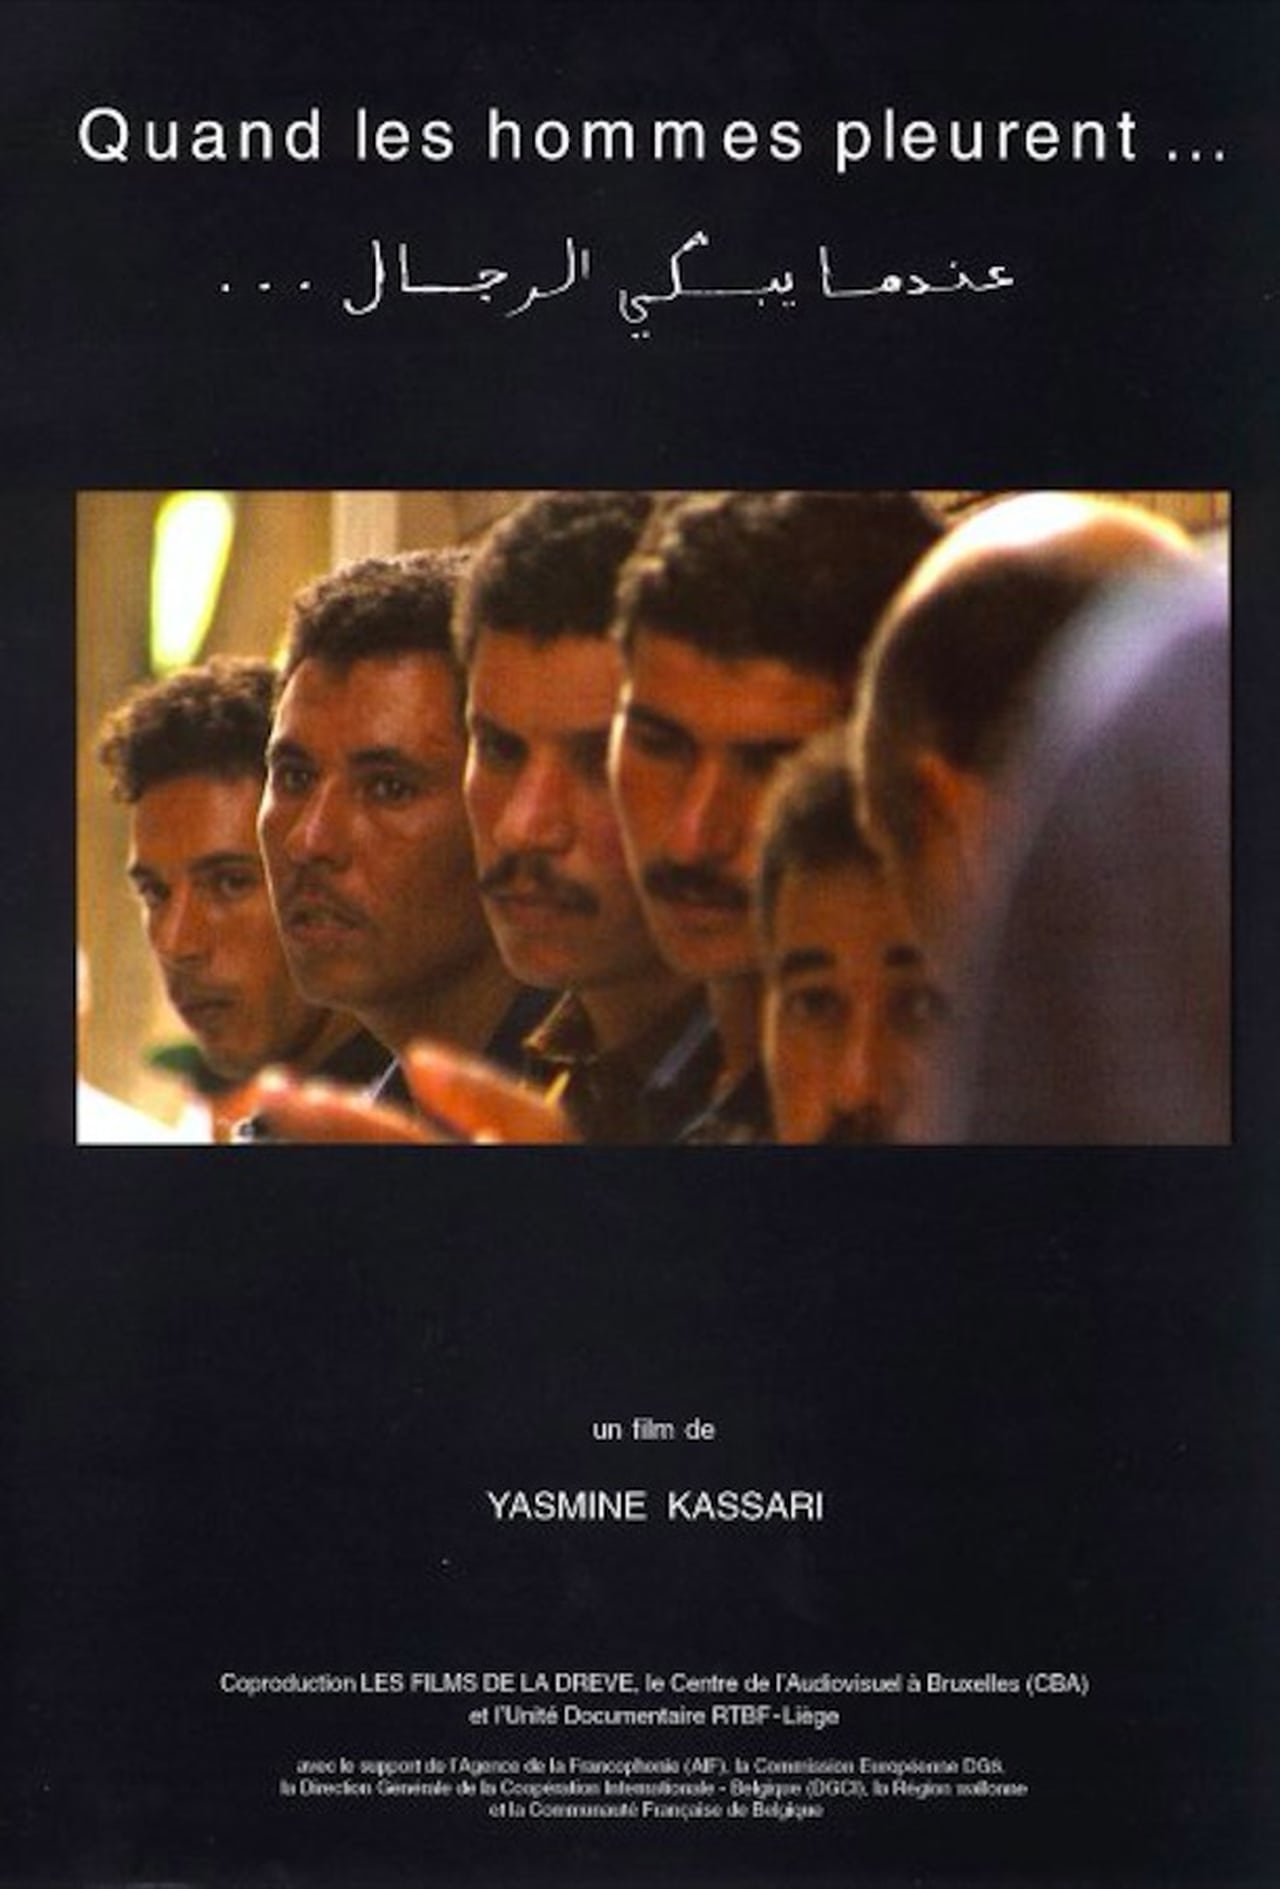 Quand les hommes pleurent (Yasmine Kassari, 1999)